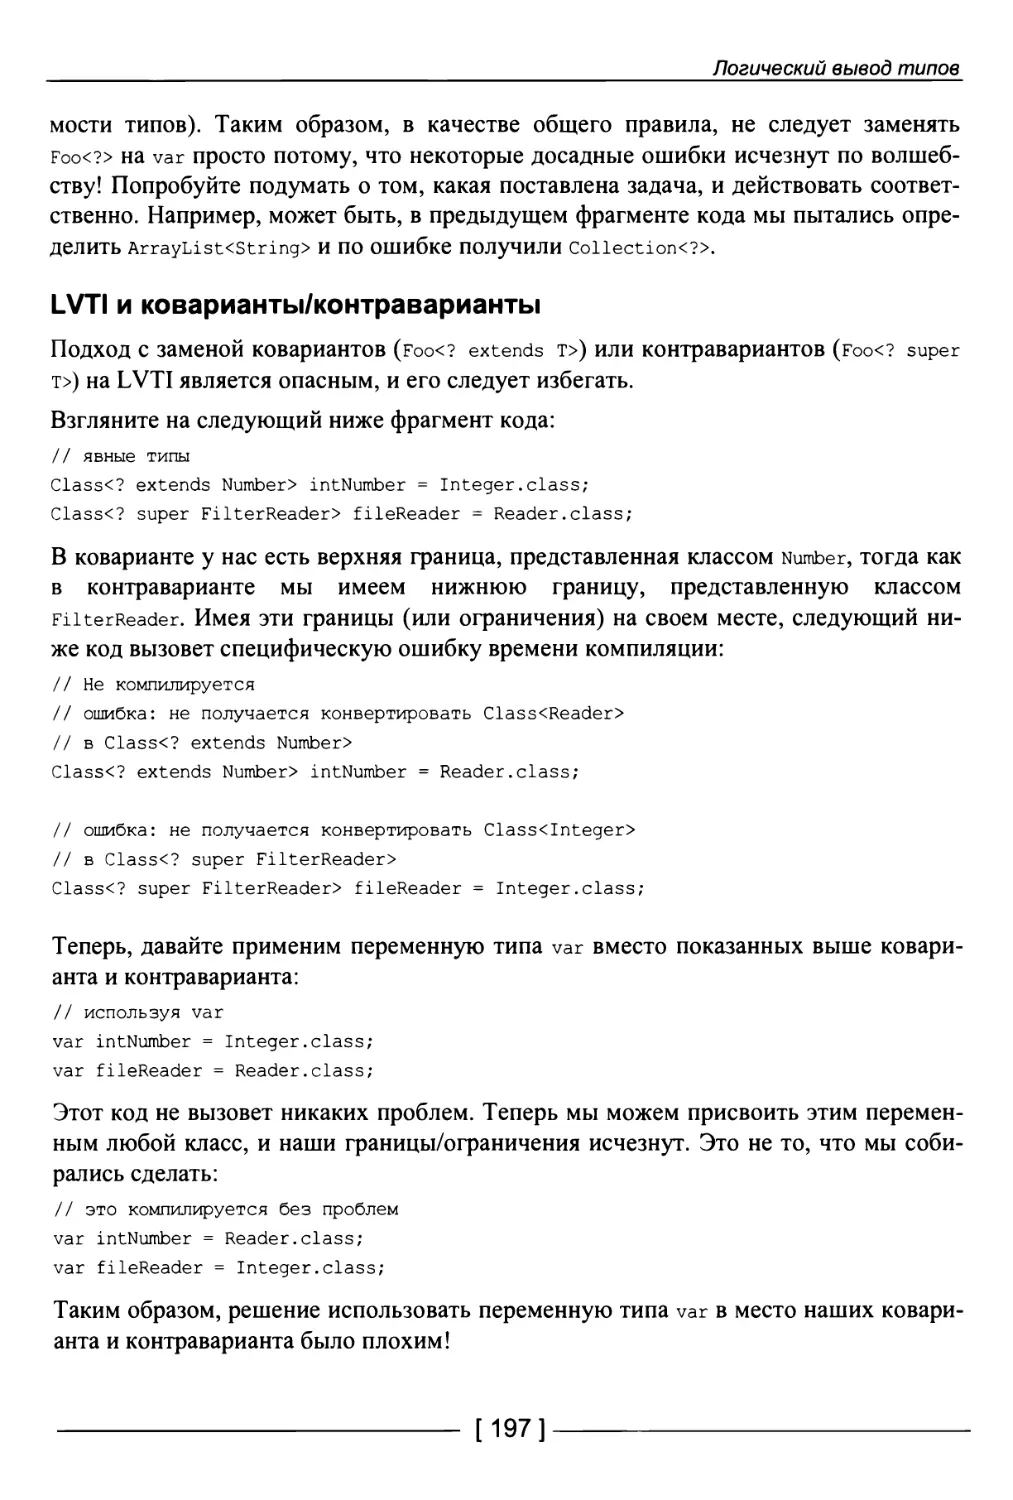 LVTI и коварианты/контраварианты